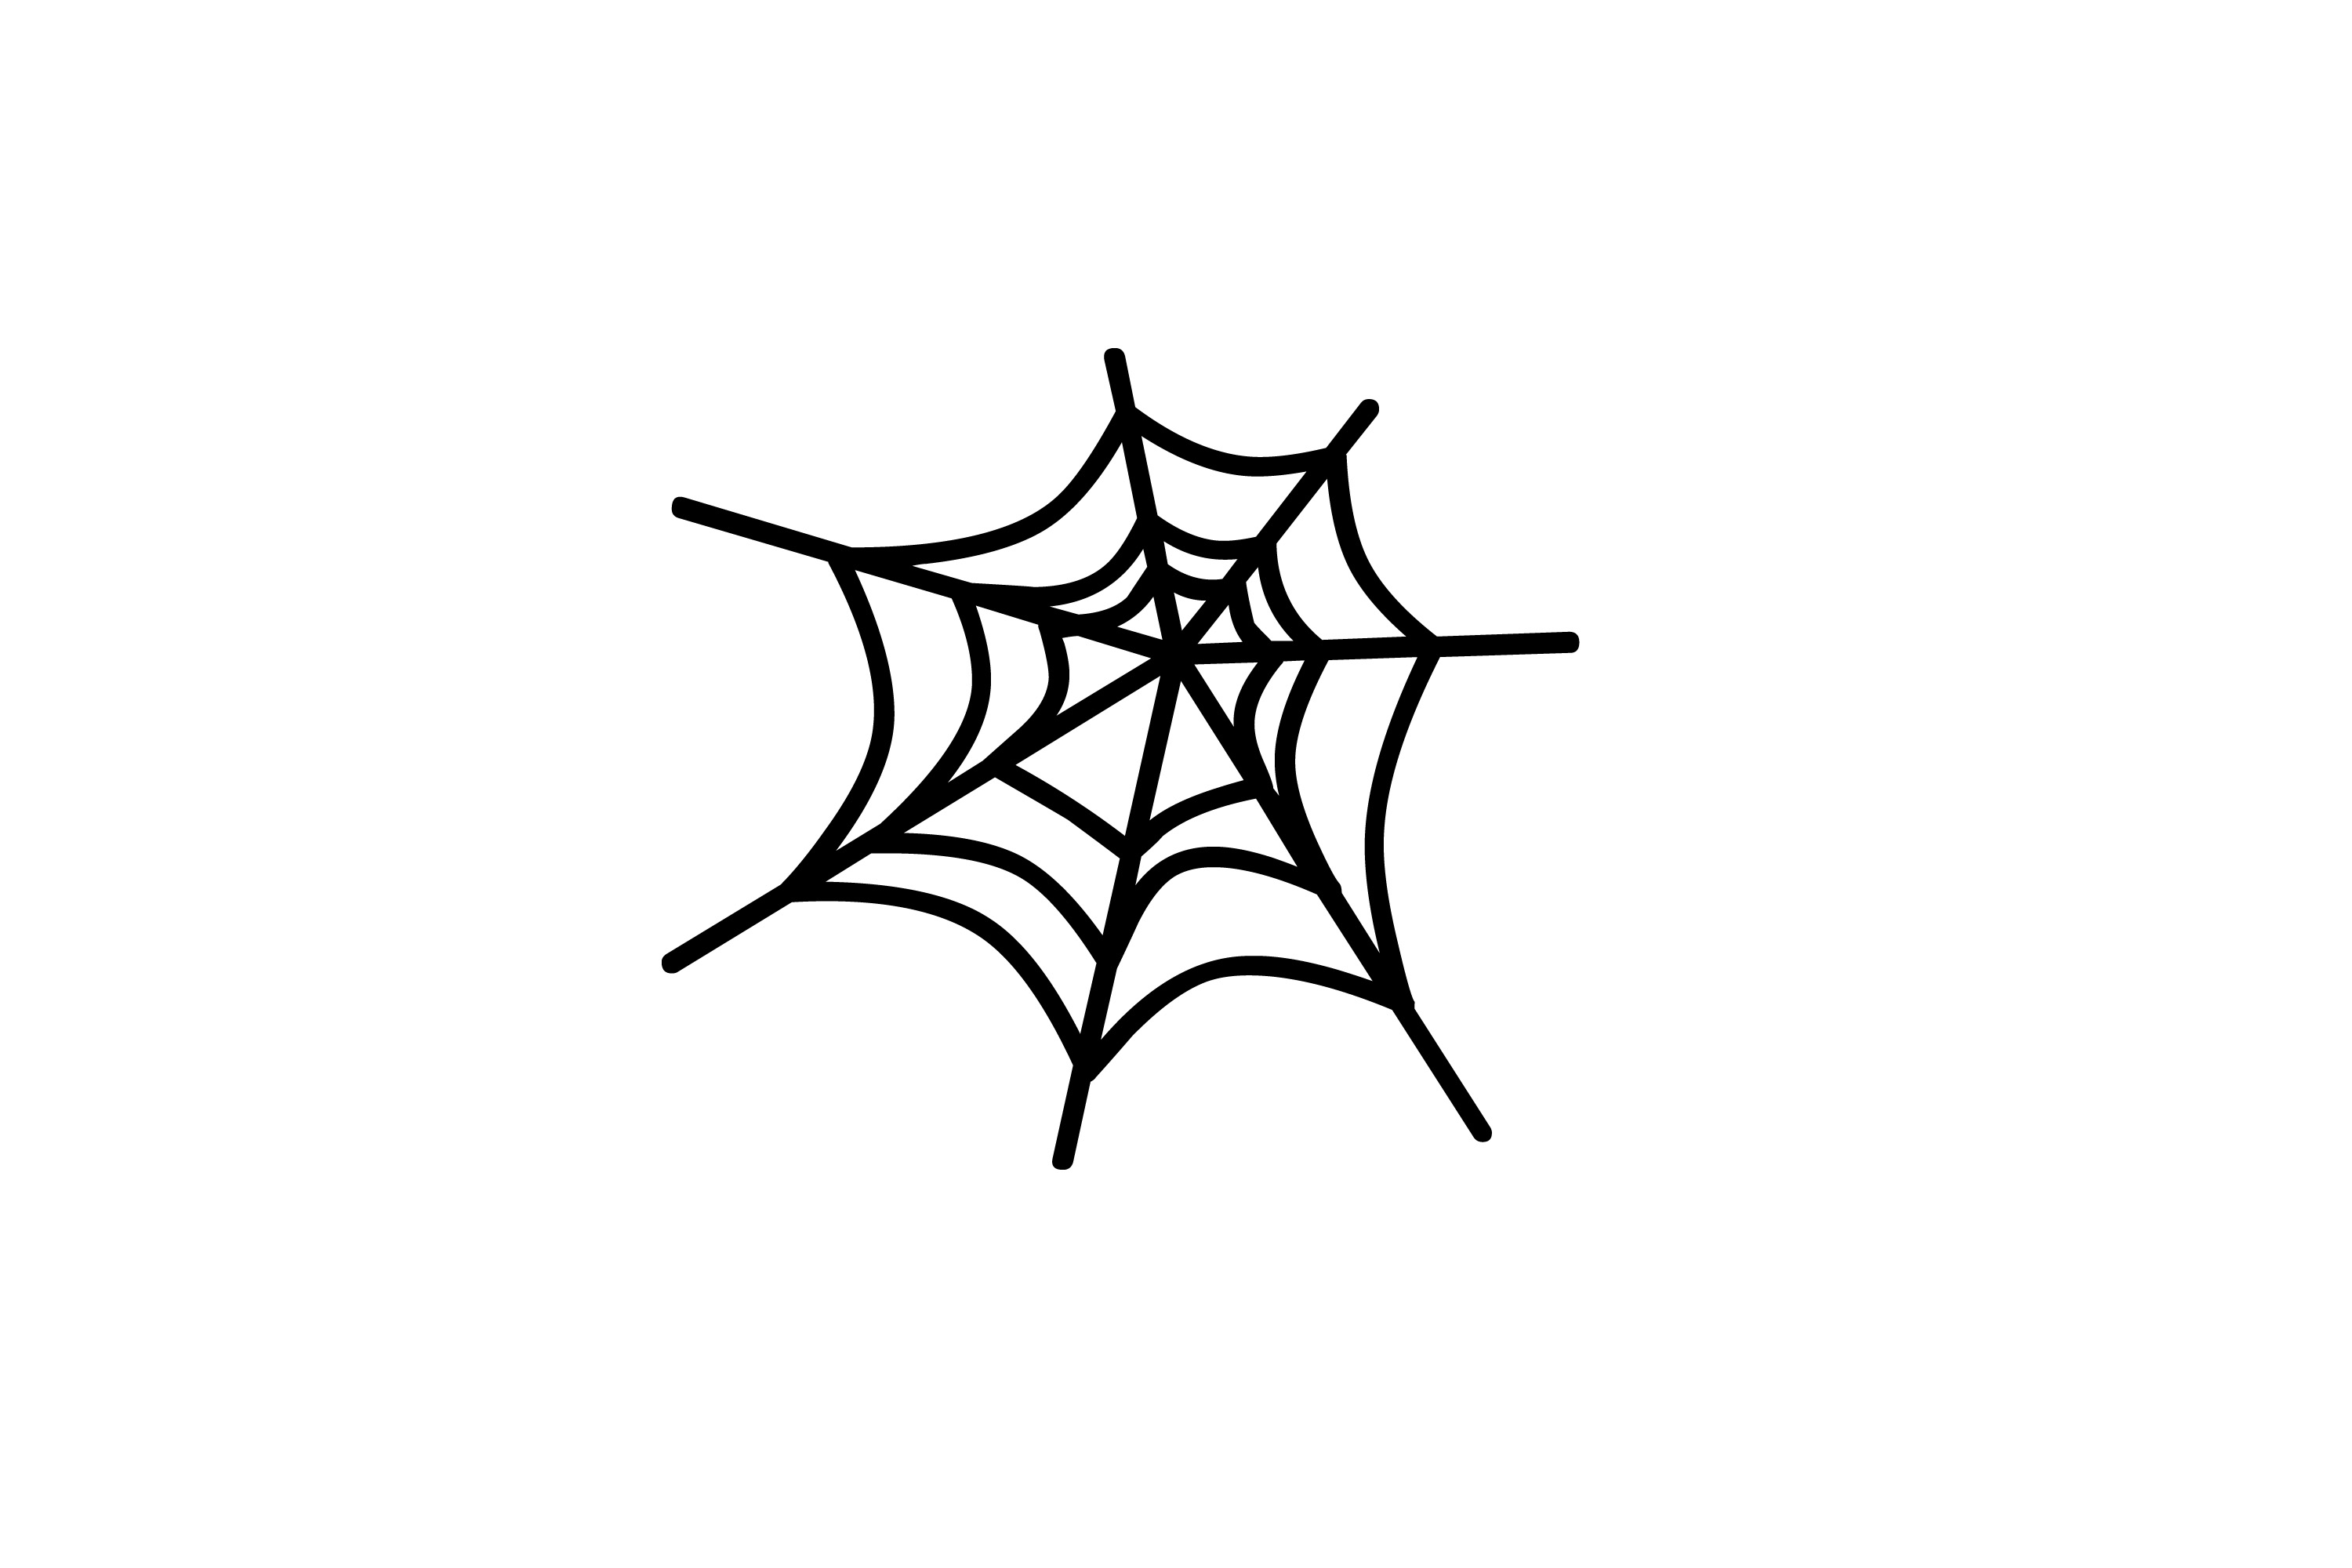 Spider web border.